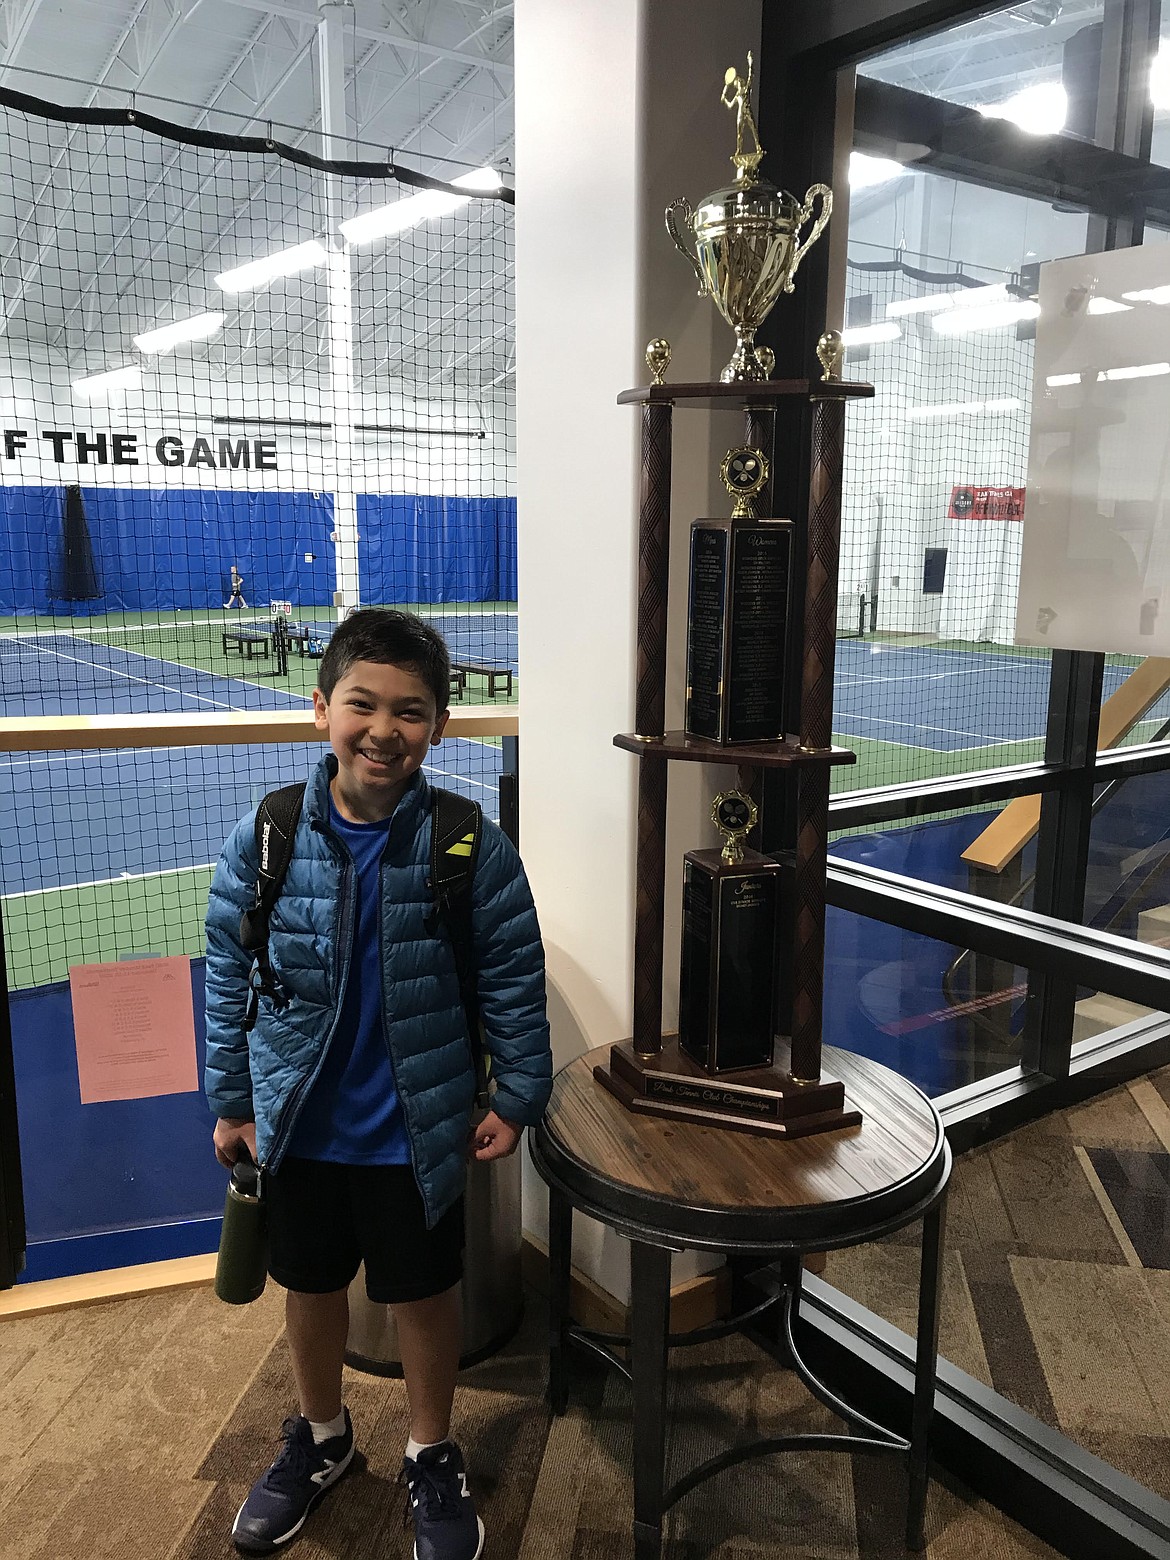 Courtesy photo
Nathan Freedman was the junior boys round-robin winner at the recent Peak Hayden Member Club Tennis Tournament at Peak Health and Wellness in Hayden.